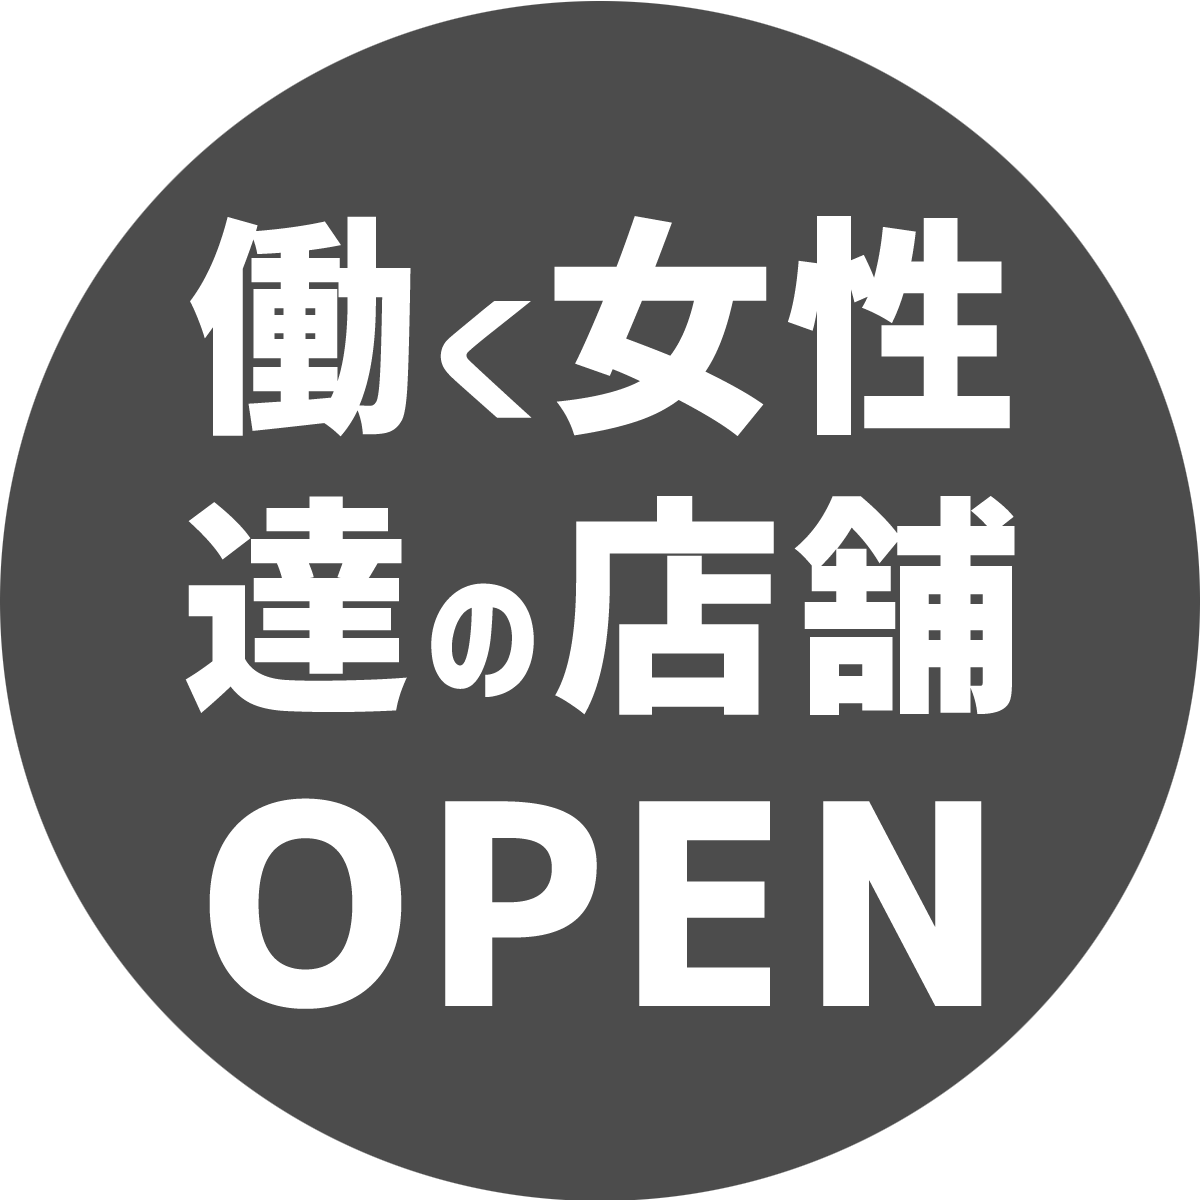 eYASHI Shop 姉妹店、wGIRL Open！